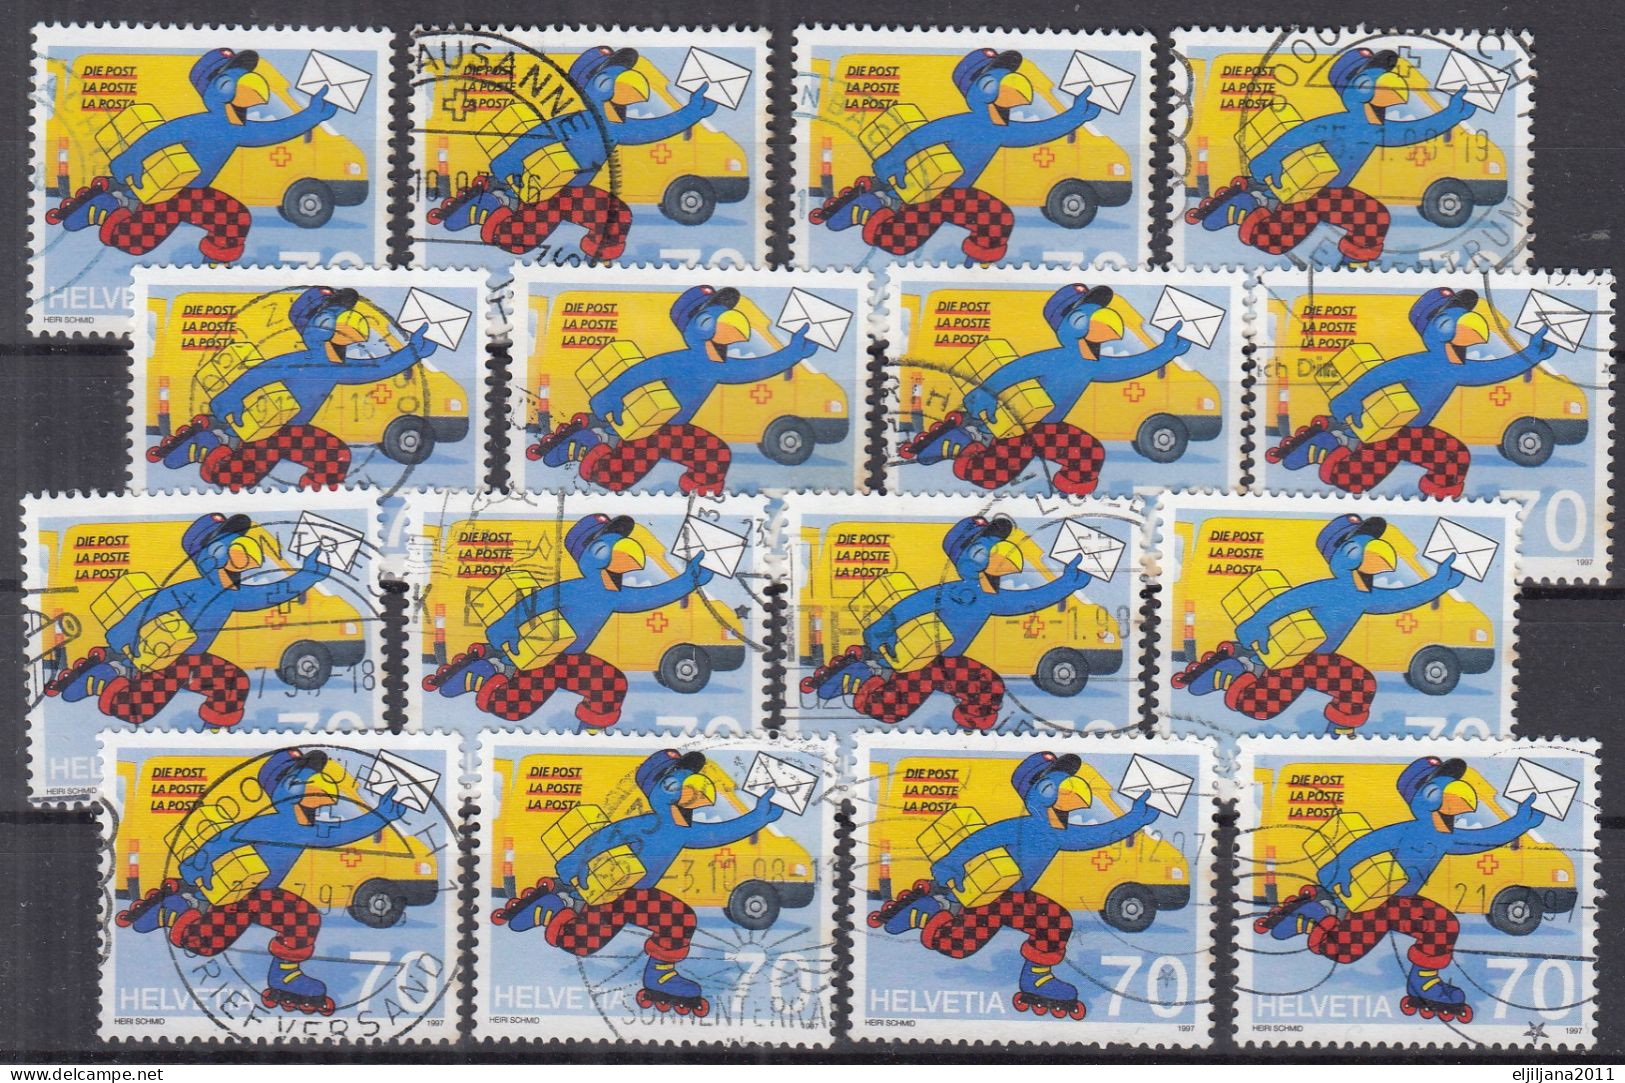 Switzerland / Helvetia / Schweiz / Suisse 1997 ⁕ Globi Bei Post / Post Man Mi.1610 ⁕ 16v Used - Used Stamps